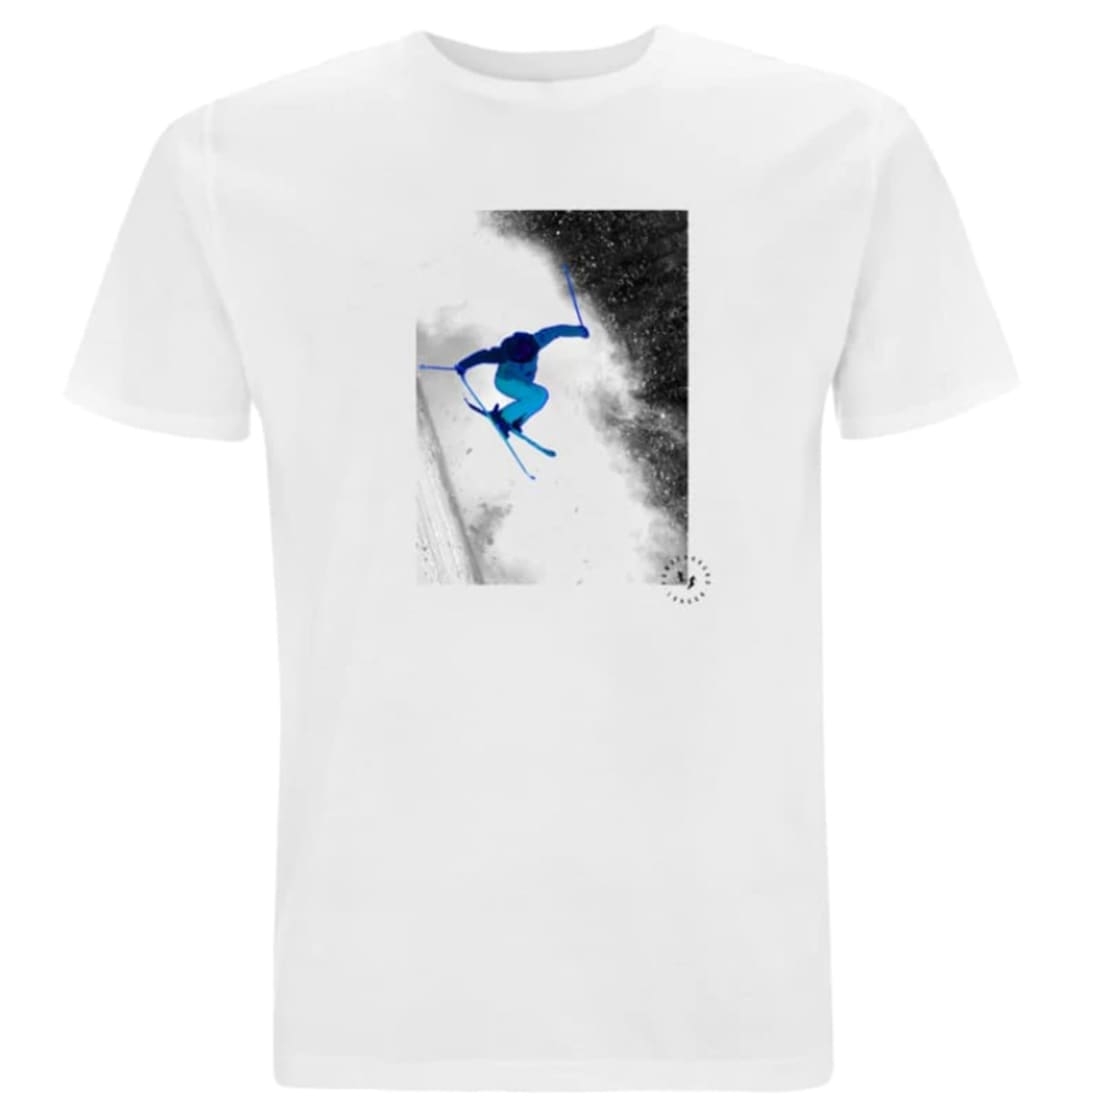 Powderhound Unisex T Shirt, Blue Skier, EXTRA SMALL – Powderhound